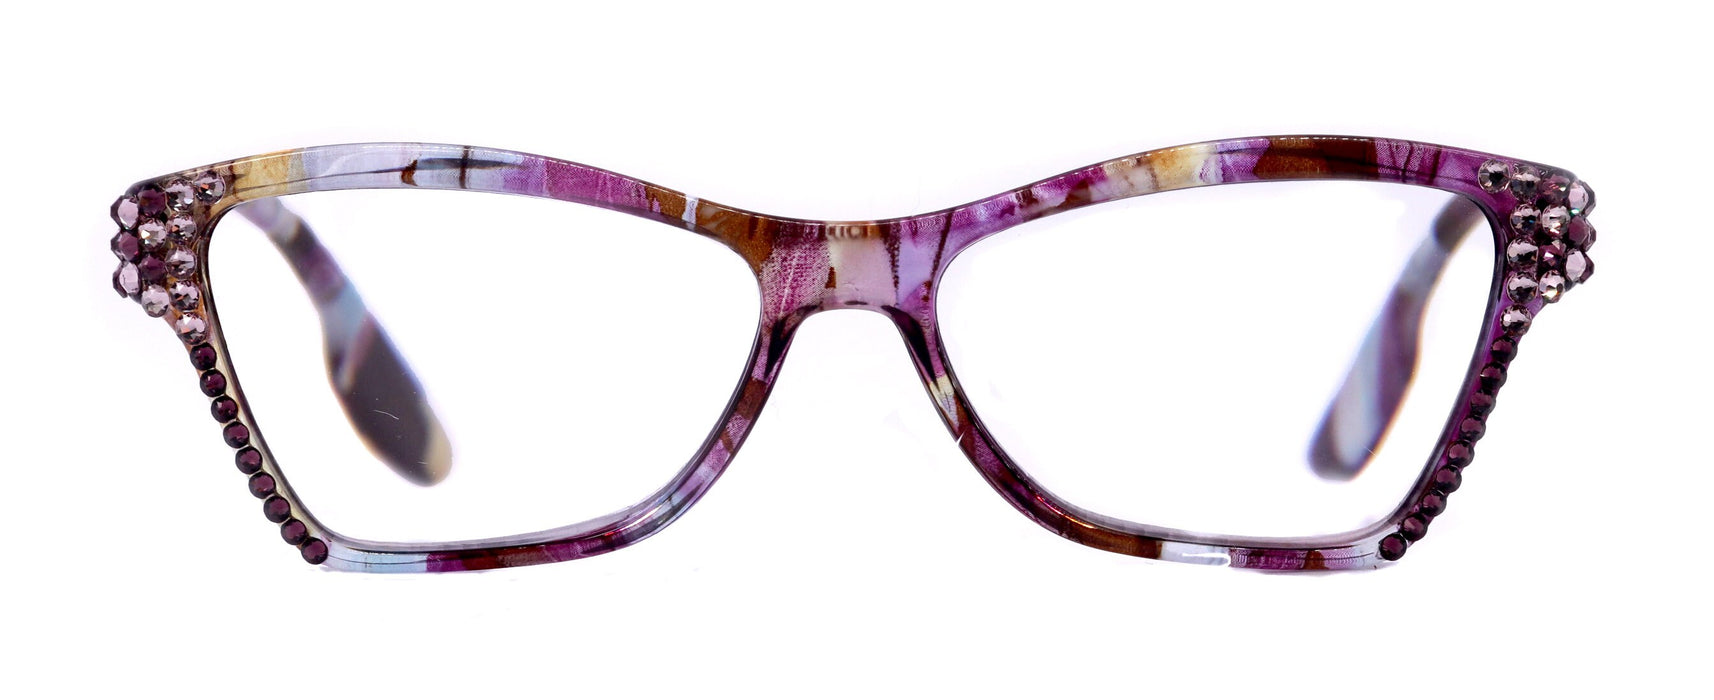 Avian, (Bling) Women Reading Glasses w (Amethyst, L. Amethyst) Genuine European Crystals, Magnifying Cat Eye (Purple) NY Fifth Avenue